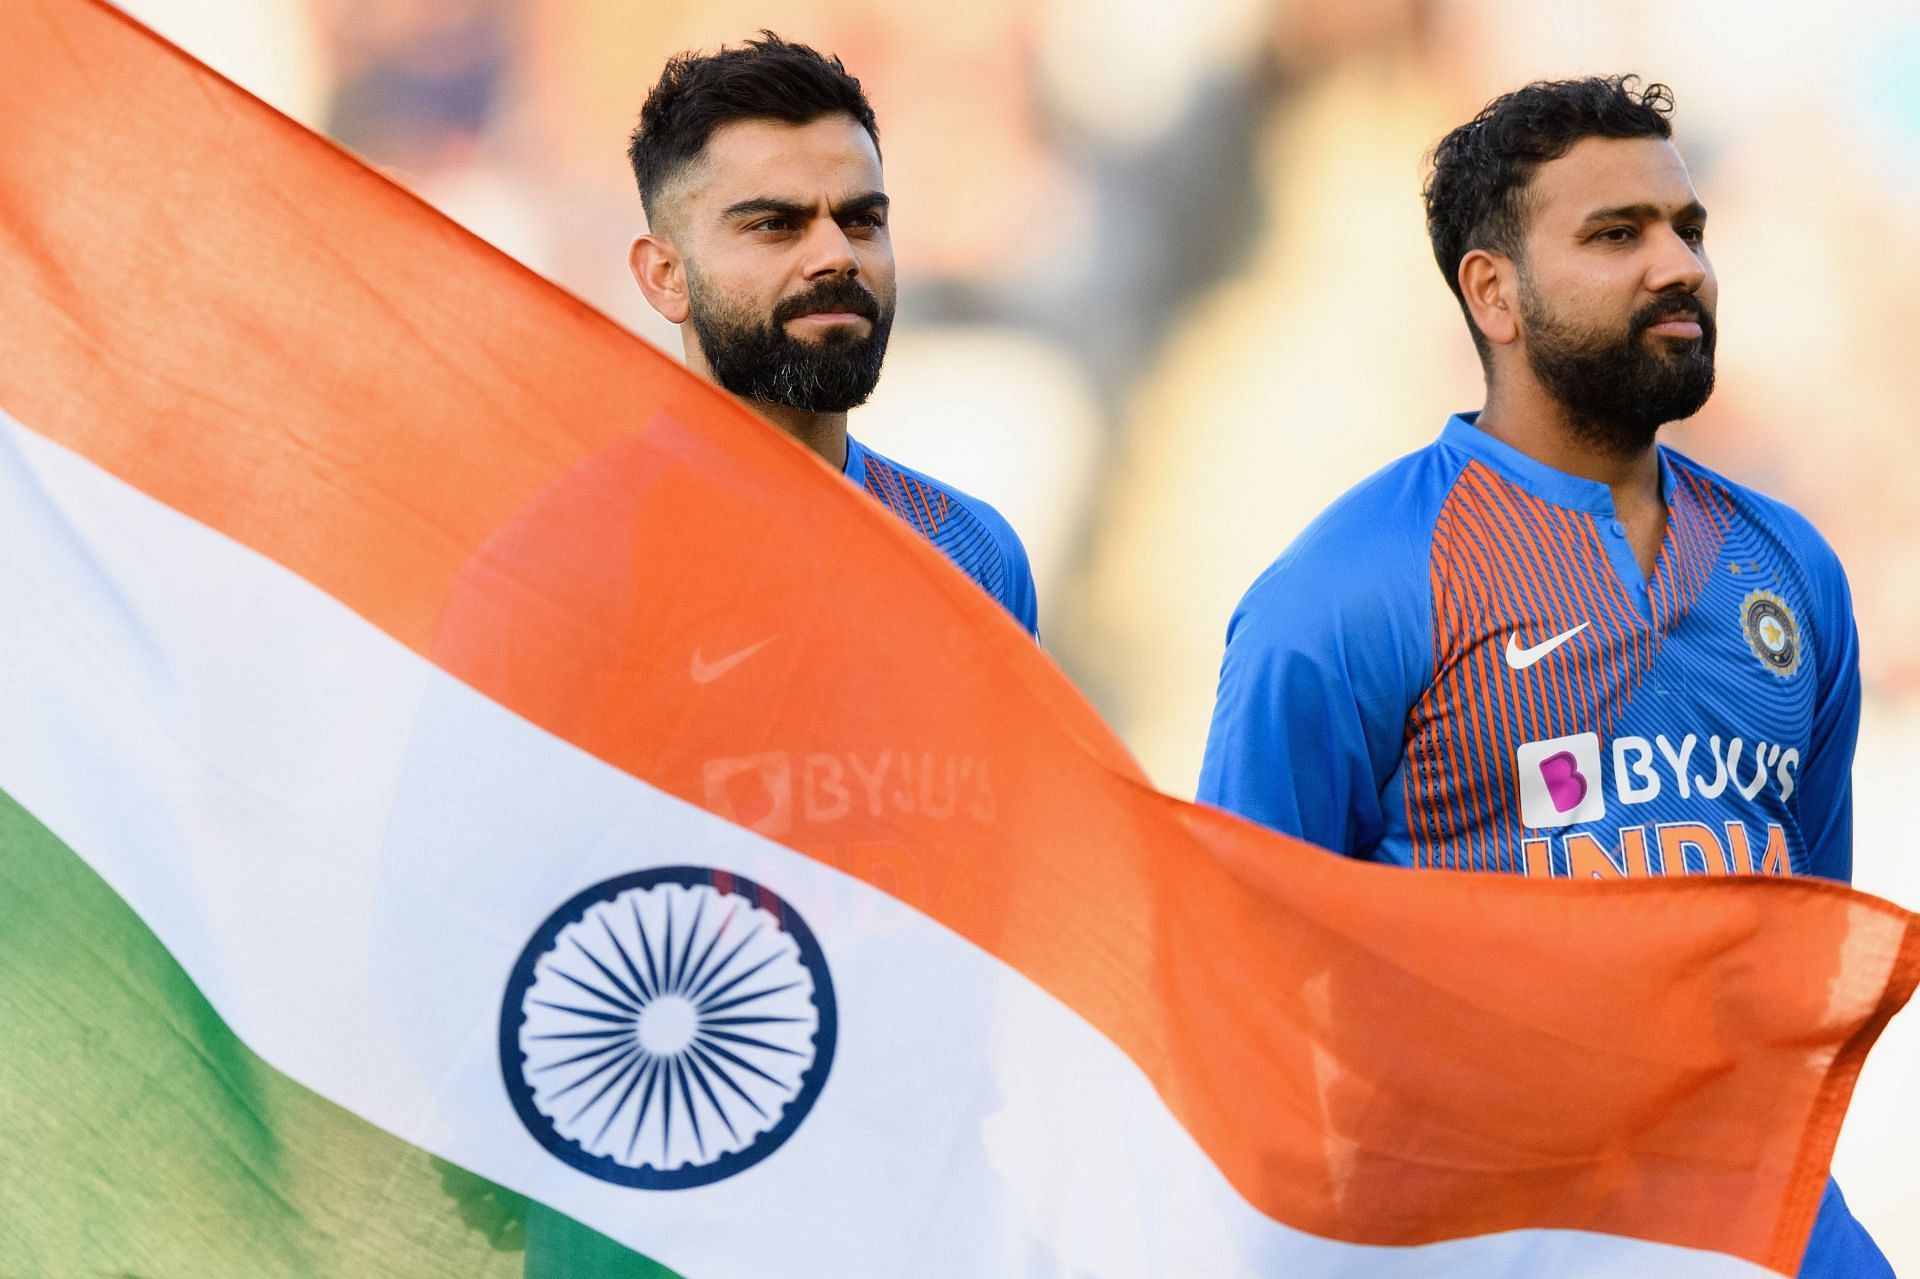 New Zealand v India - T20: Game 1